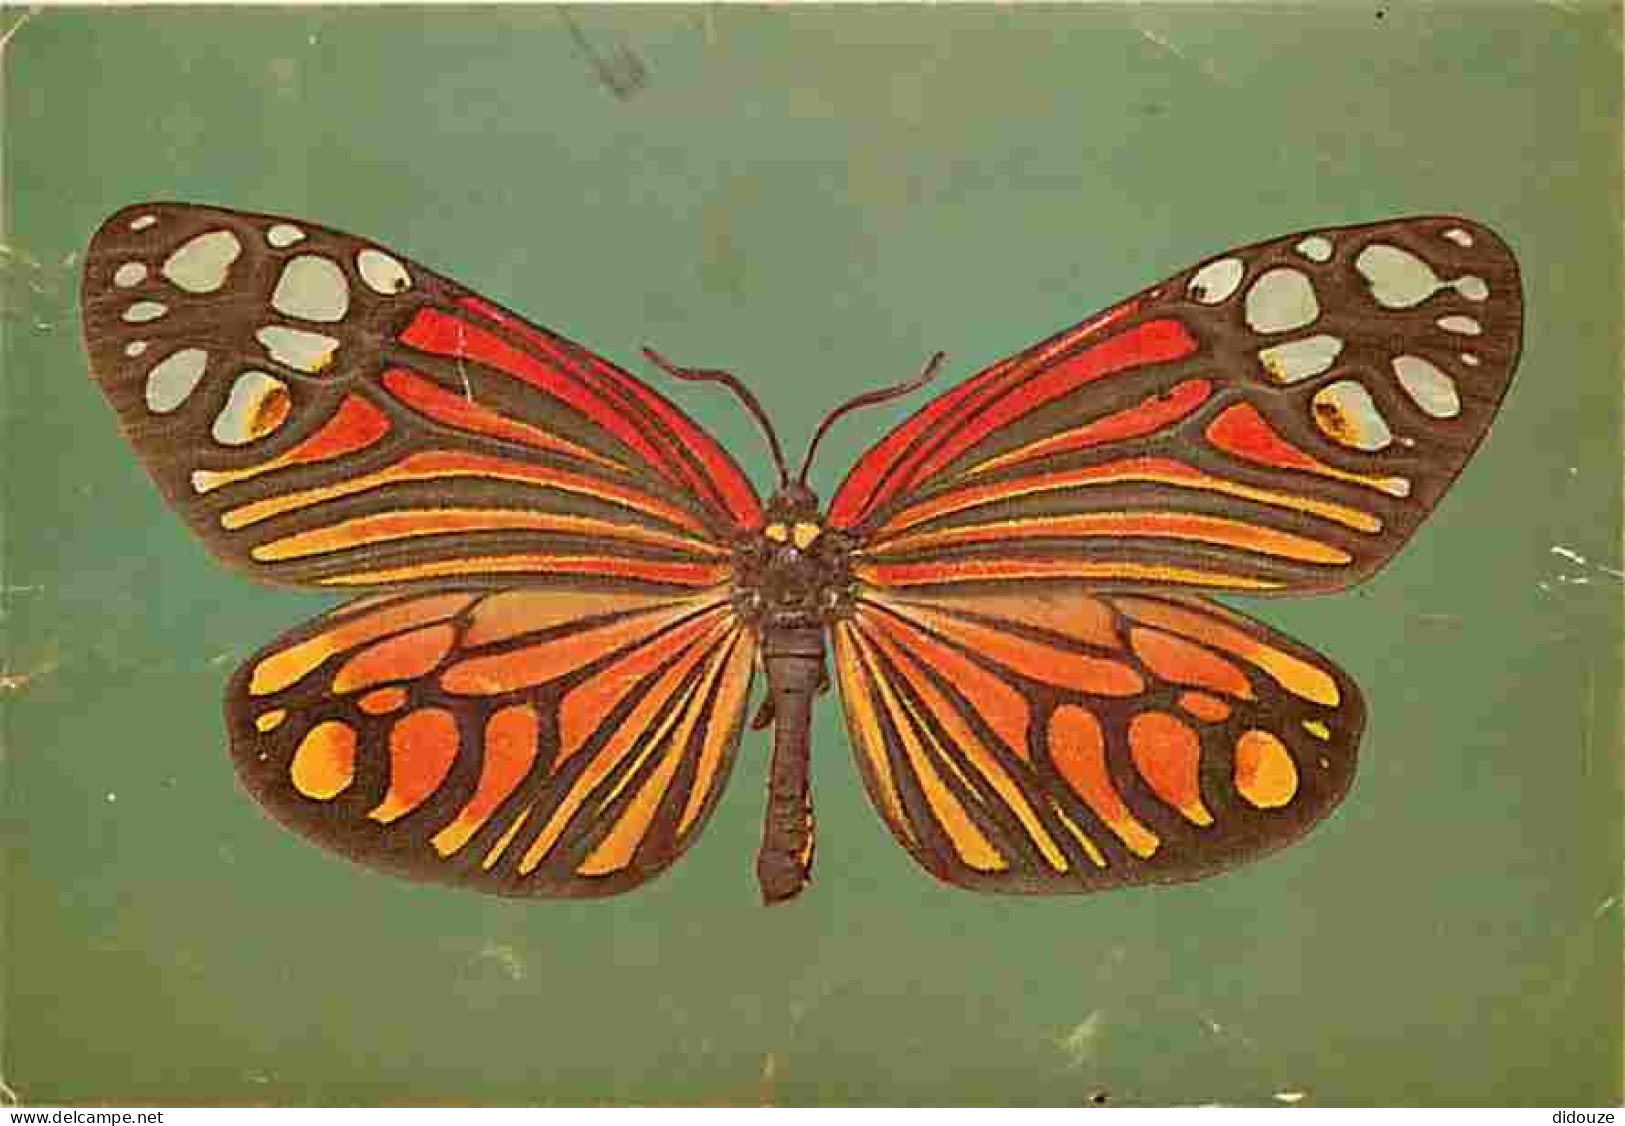 Animaux - Papillons - Tropical Moths - Campylotes Kotzschi - Zygaenidae - CPM - Voir Scans Recto-Verso - Butterflies